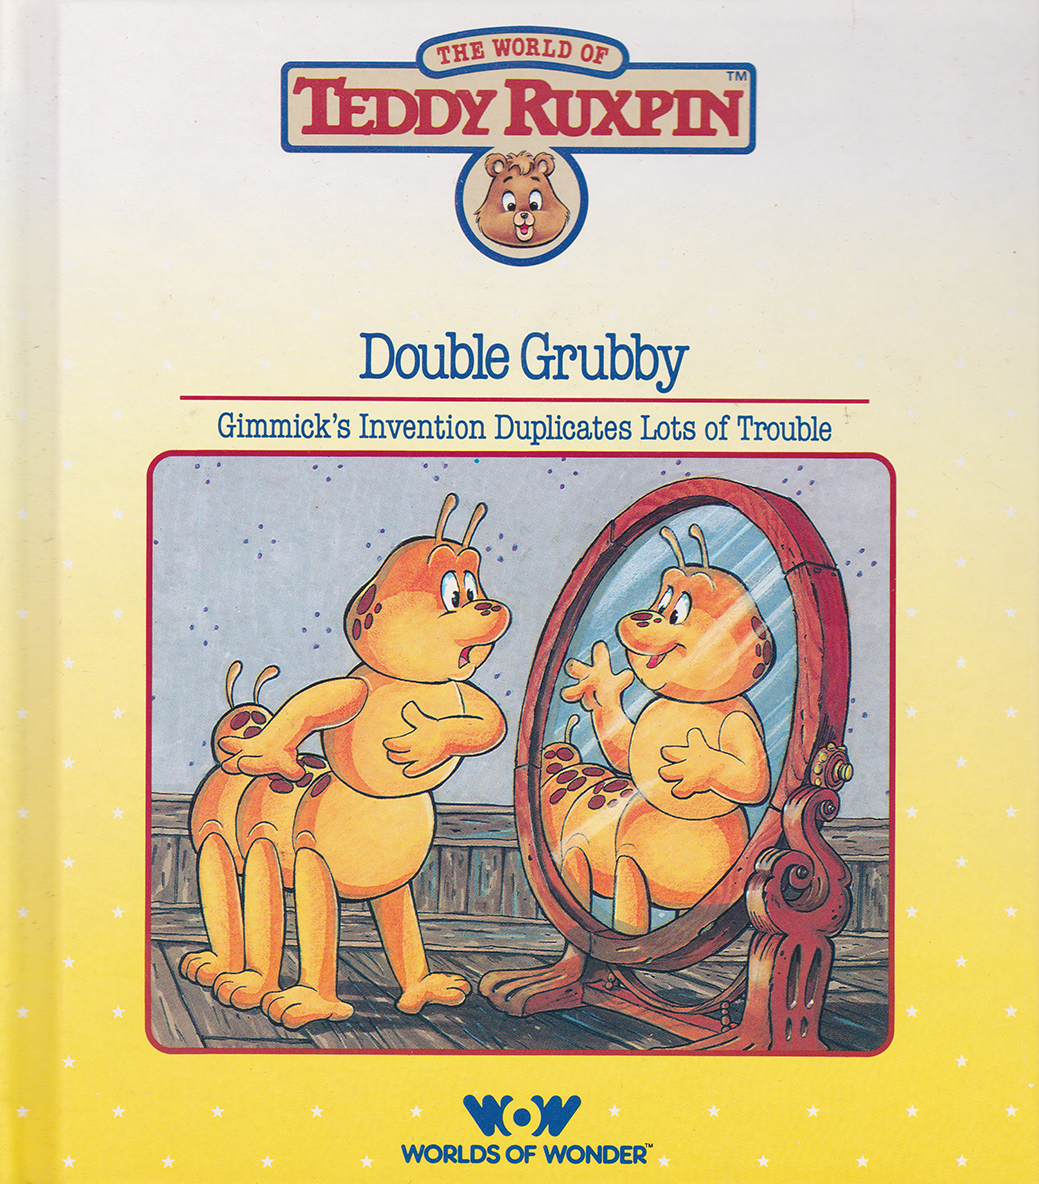 grubby from teddy ruxpin